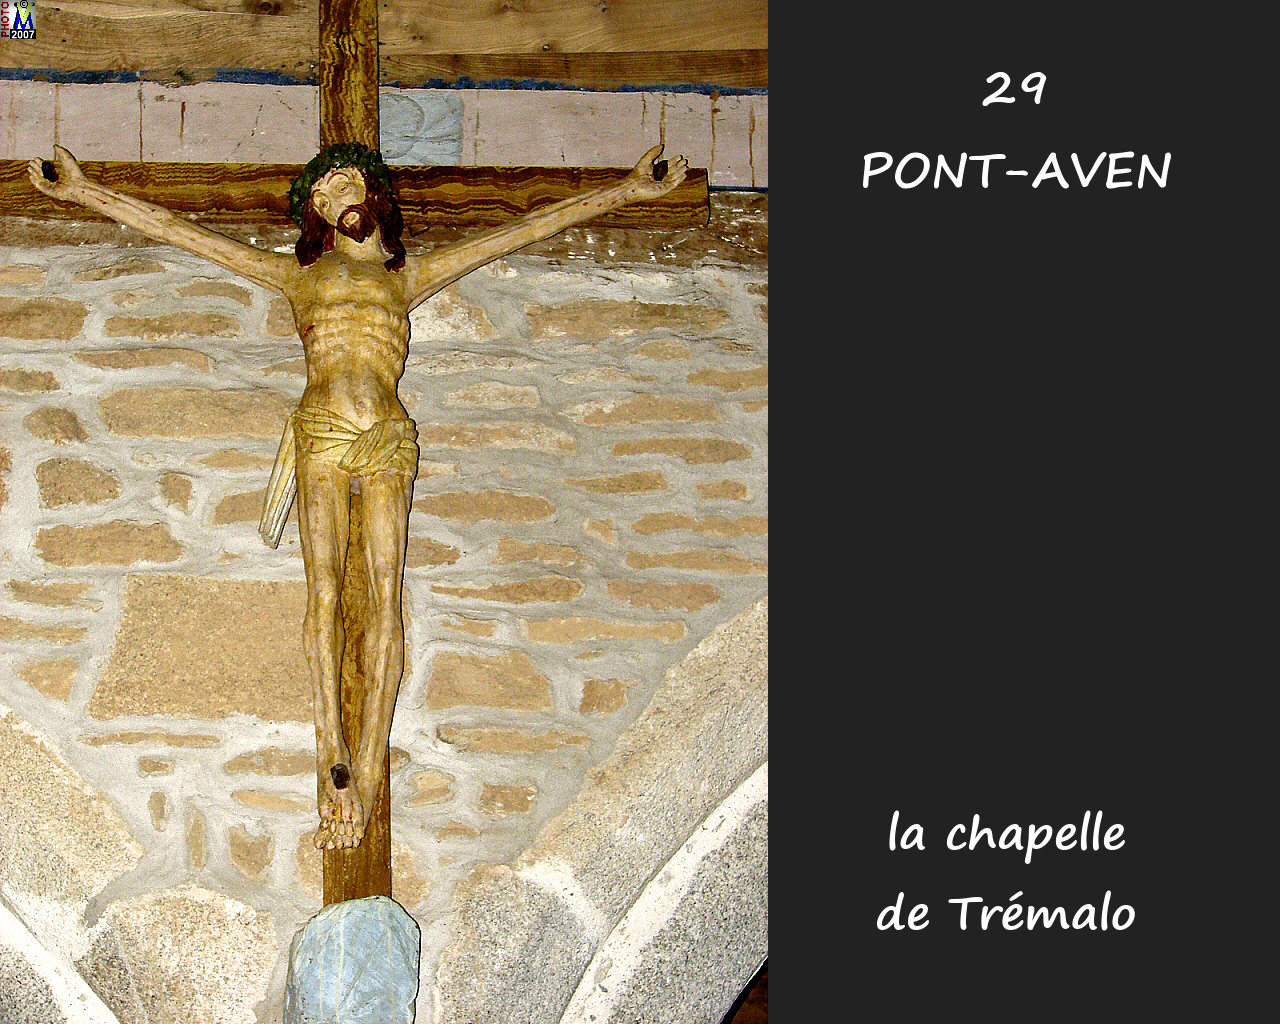 29PONT-AVEN-Tremalo-_chapelle_224.jpg